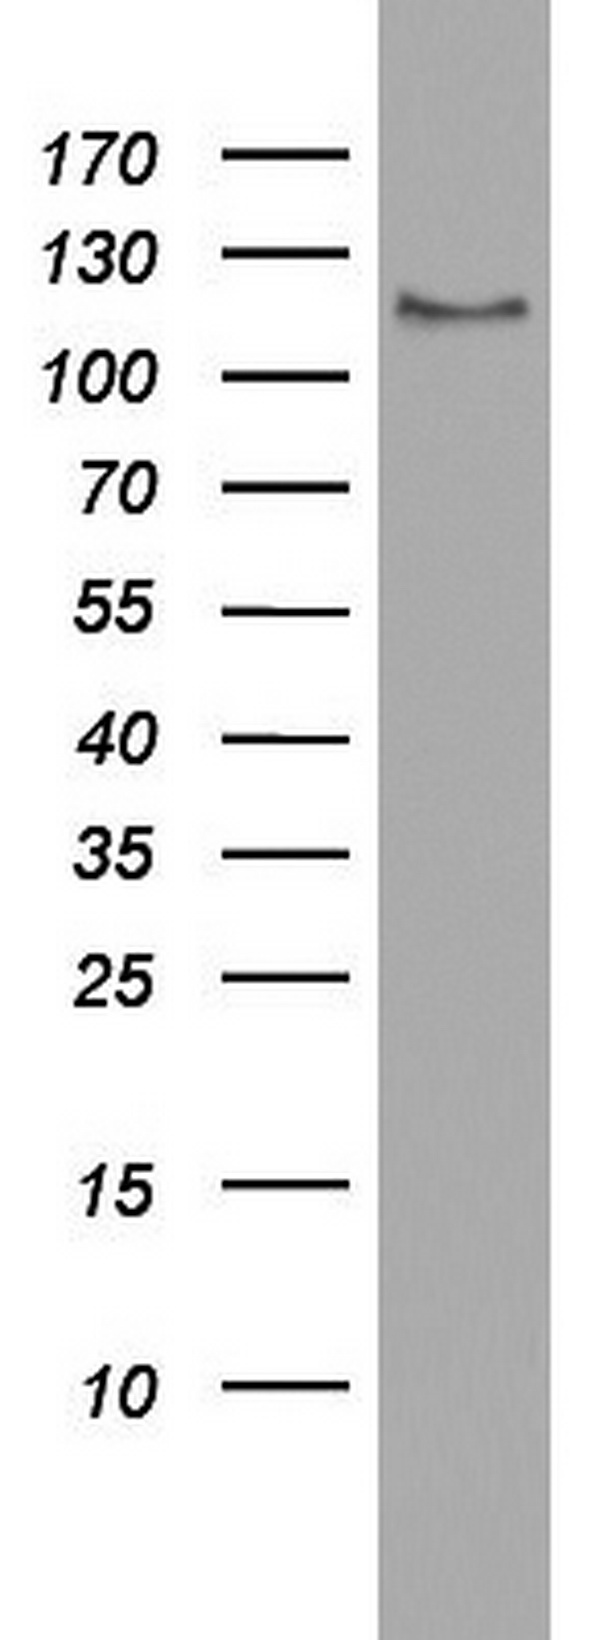 AMBRA1 antibody